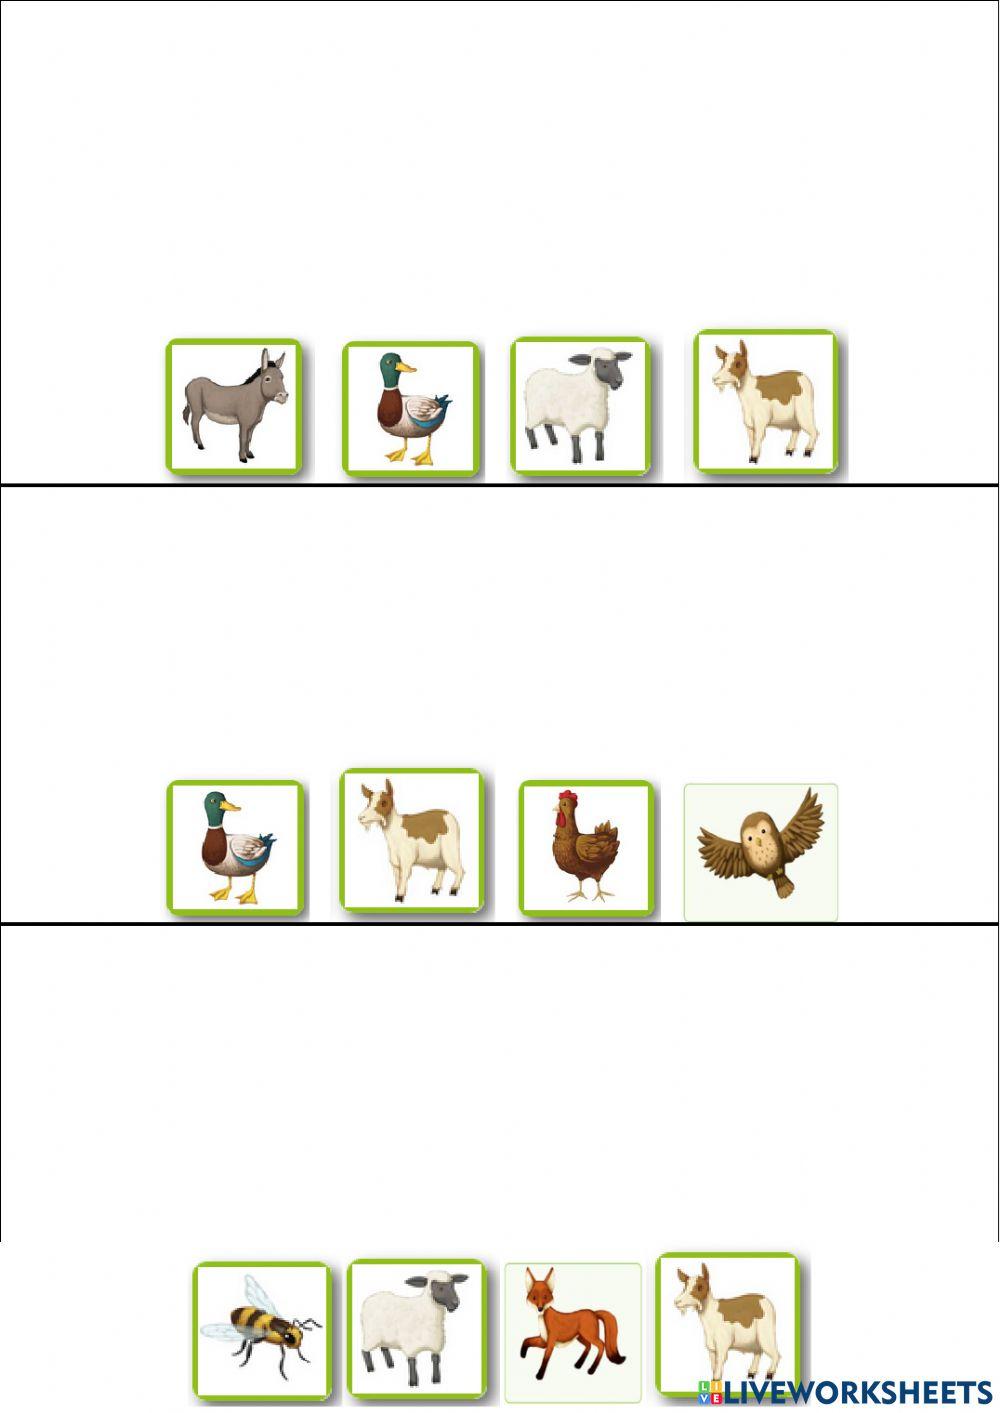 Animal description